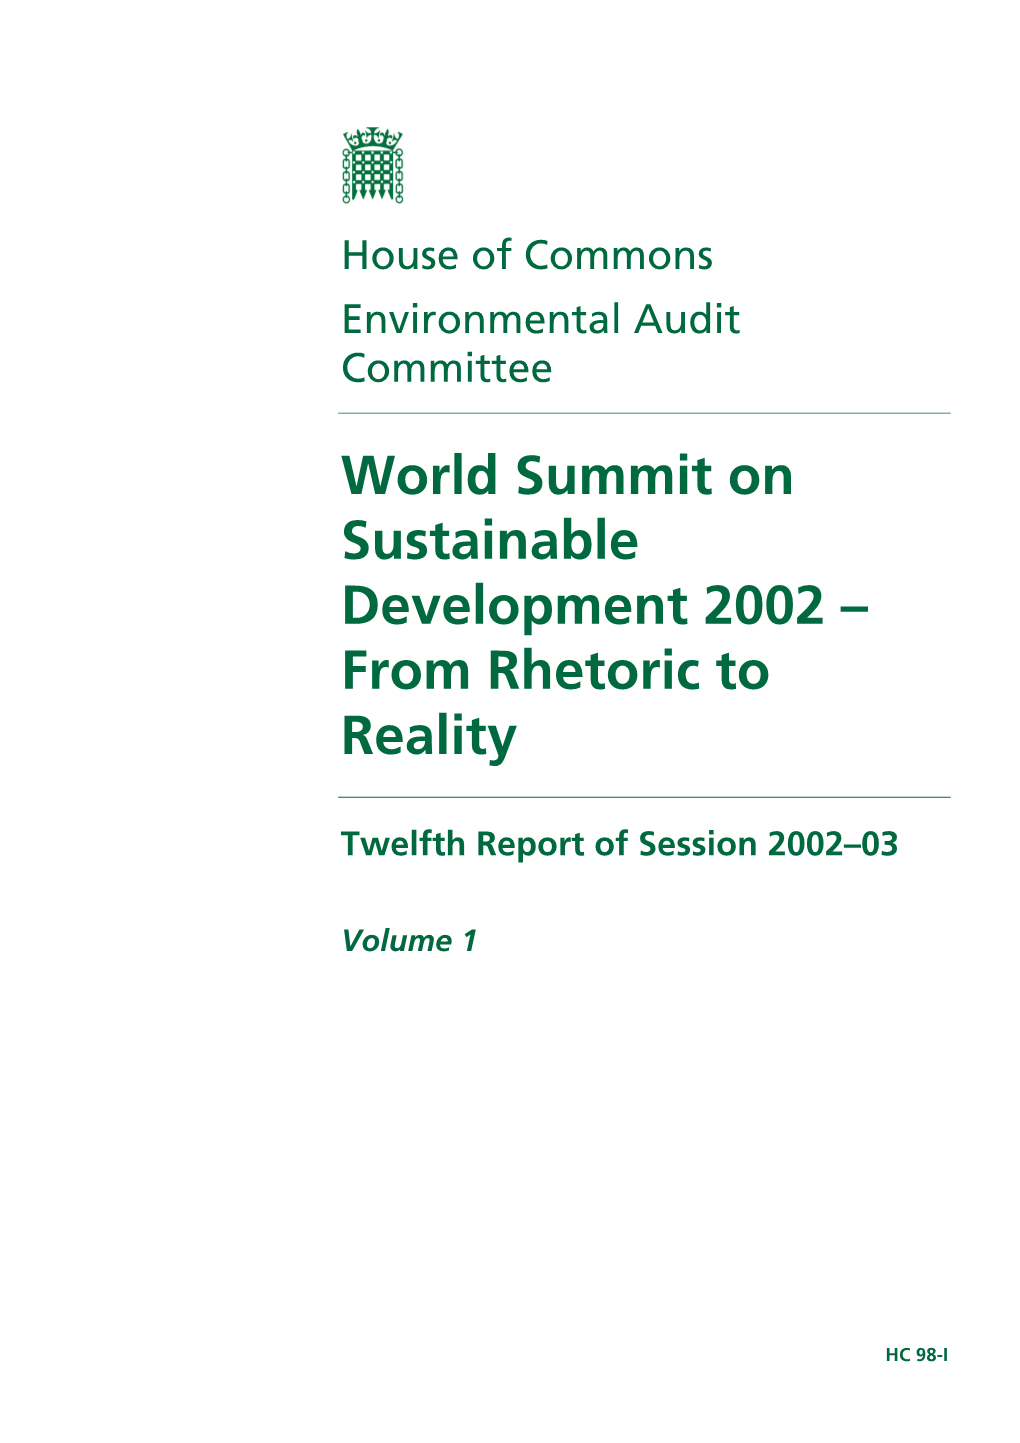 World Summit on Sustainable Development 2002 – from Rhetoric to Reality